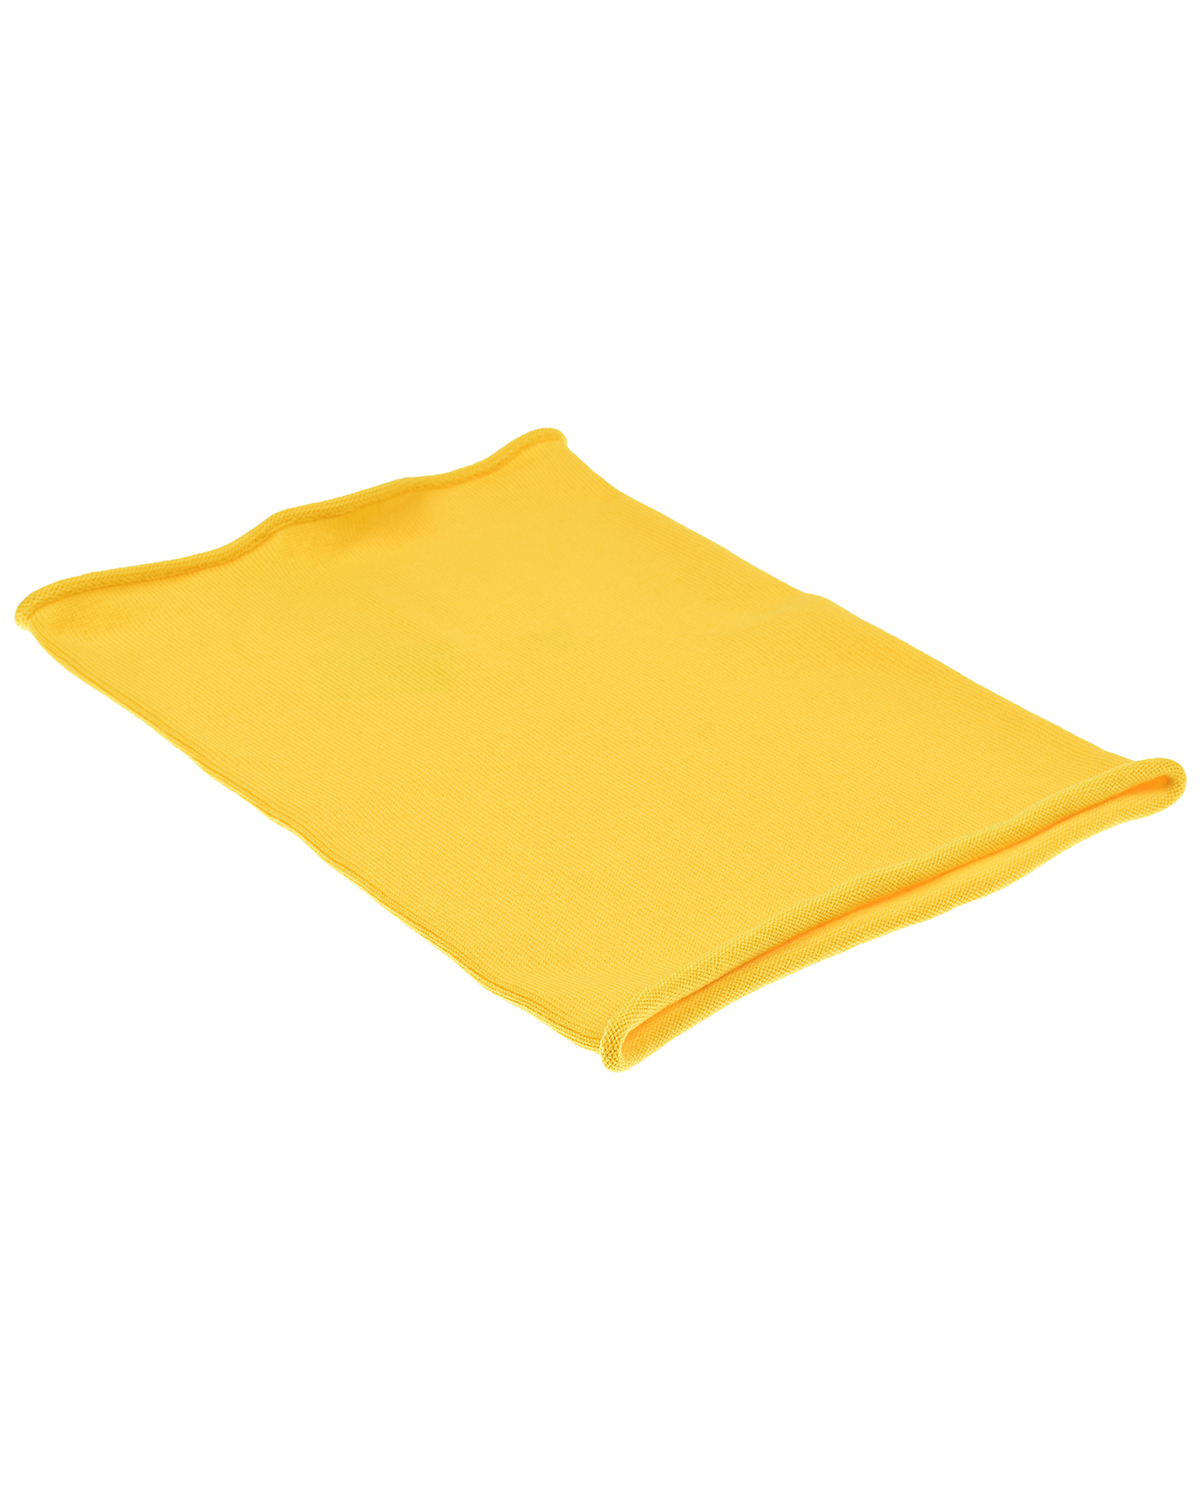 Желтый шарф-ворот, 30x40 см Norveg детский, размер unica - фото 1